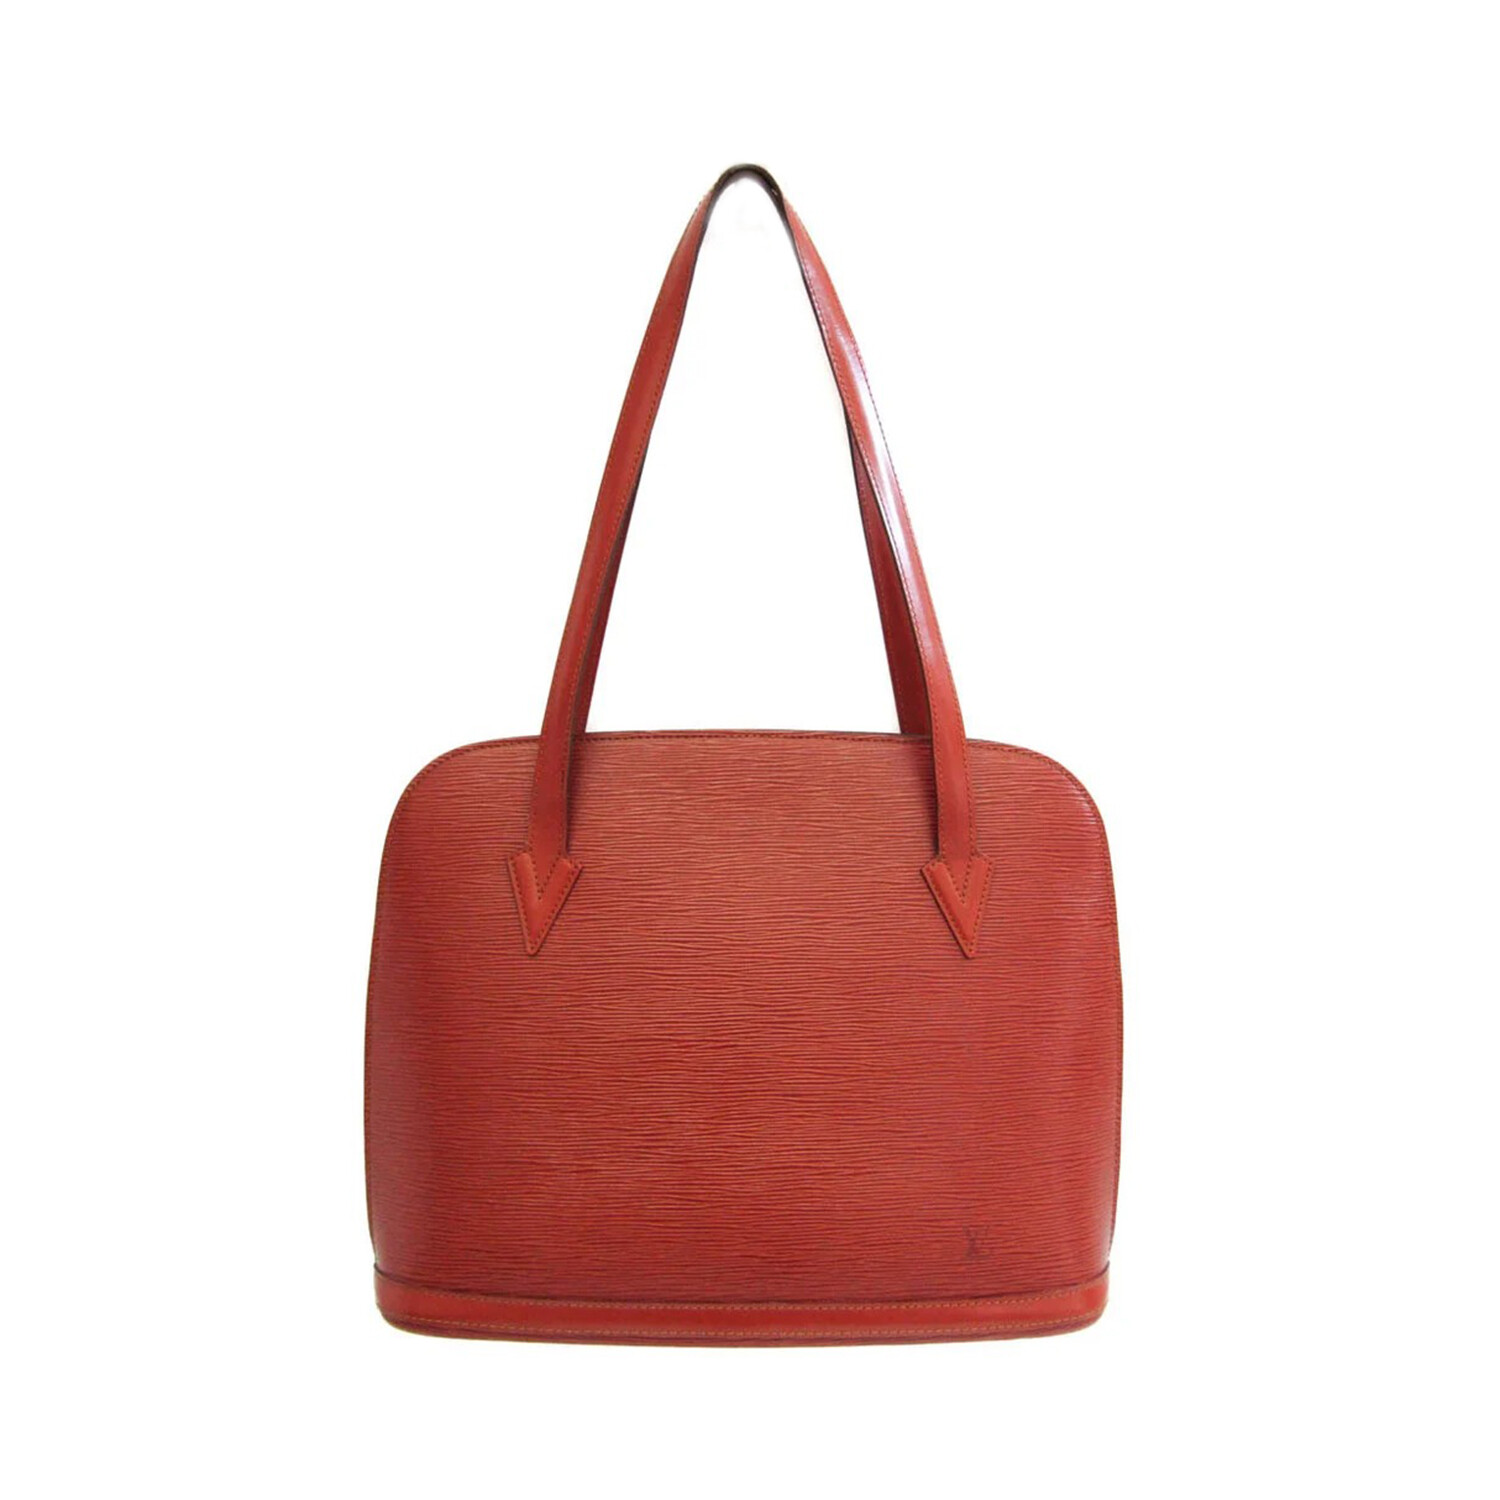 Louis Vuitton // Epi Leather Shoulder Bag // Kenyan Brown // Pre